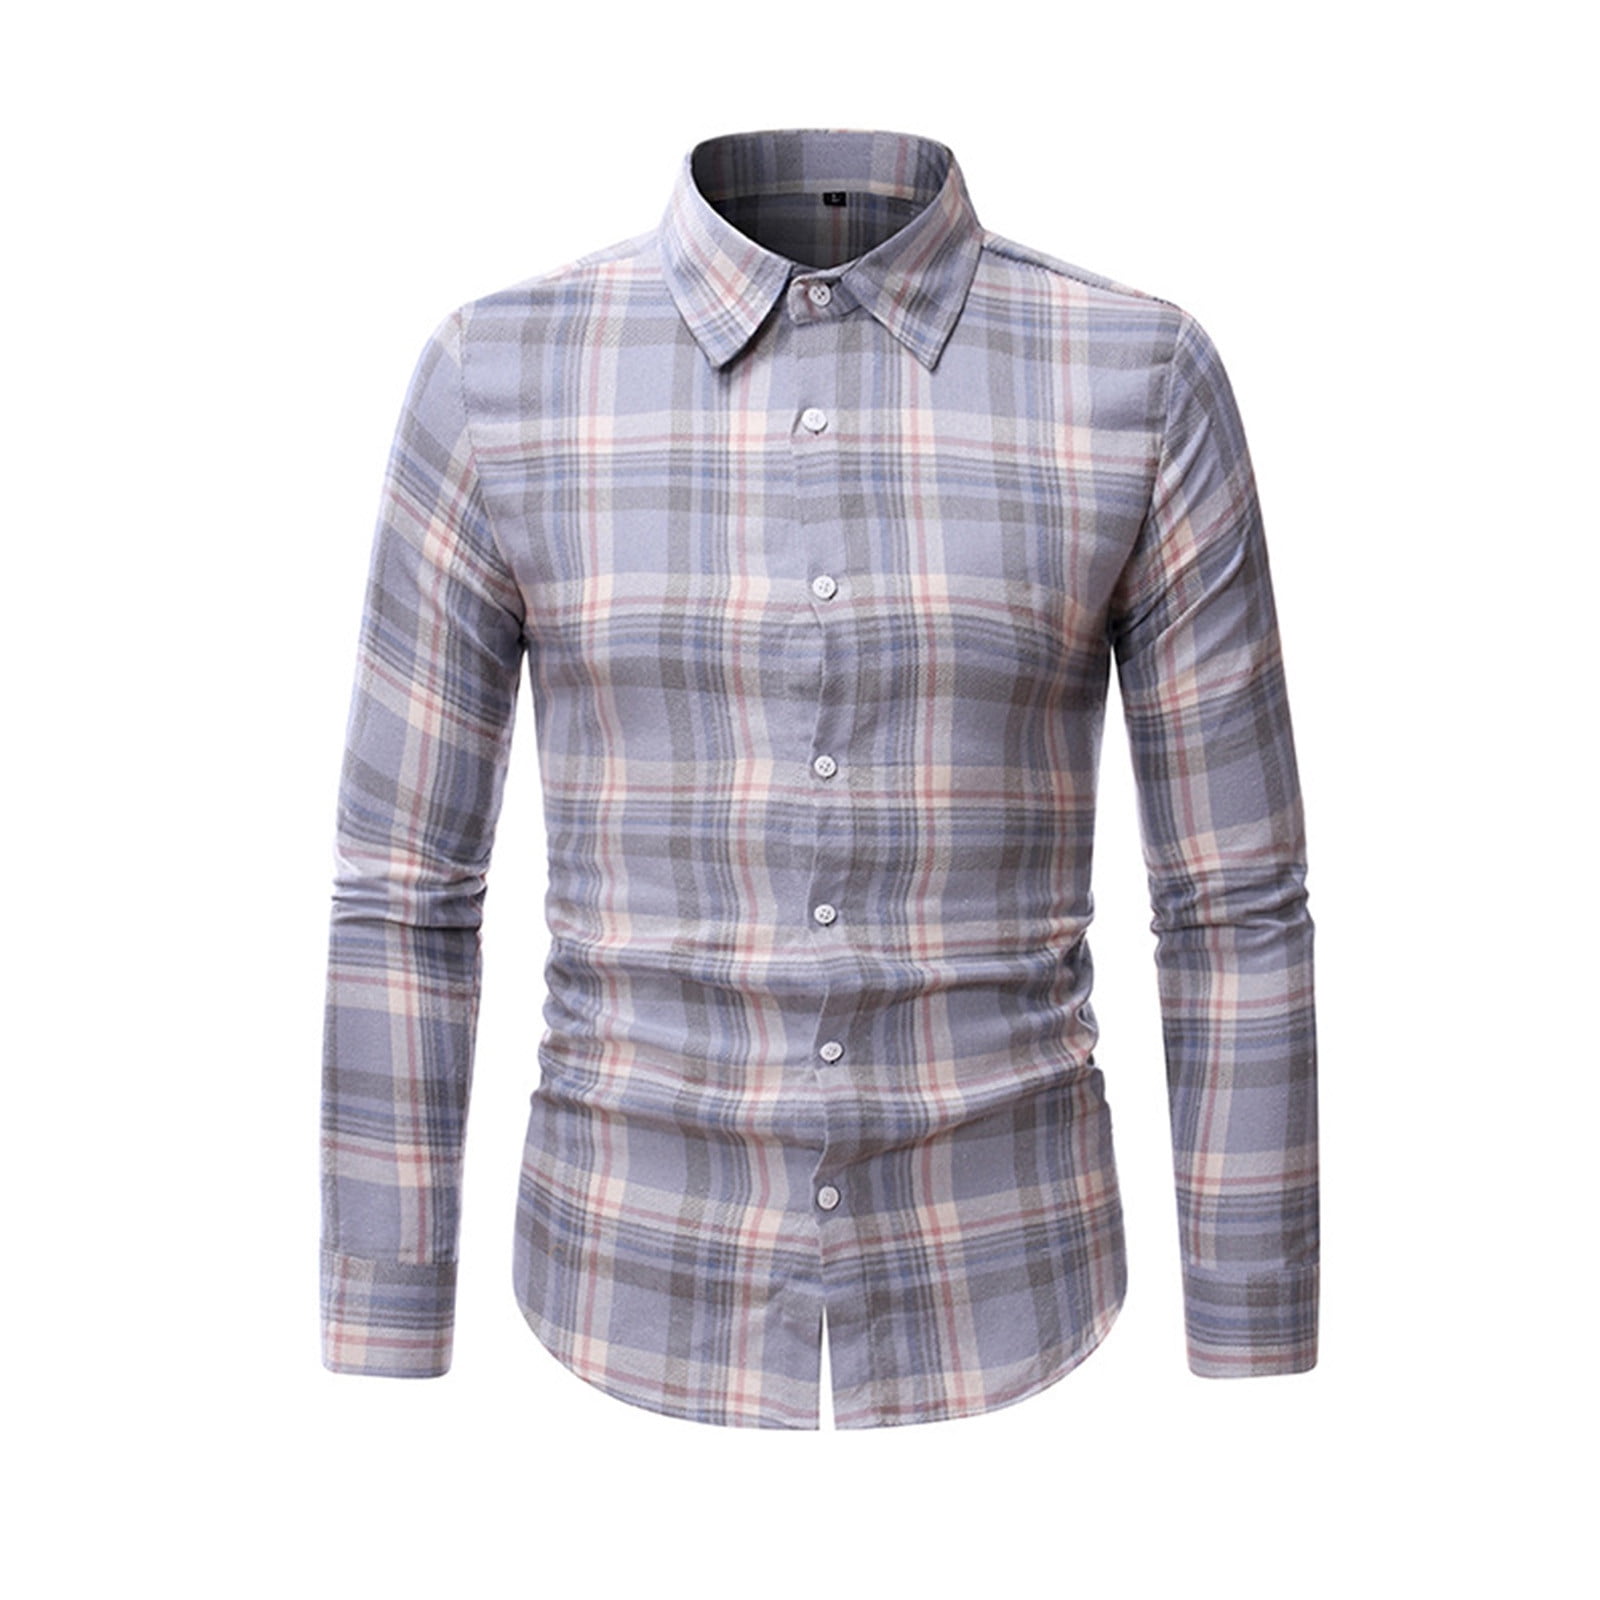 Mfasica Men Long-Sleeve Plaid Turn-Down Collar Blouses and Tops Shirts